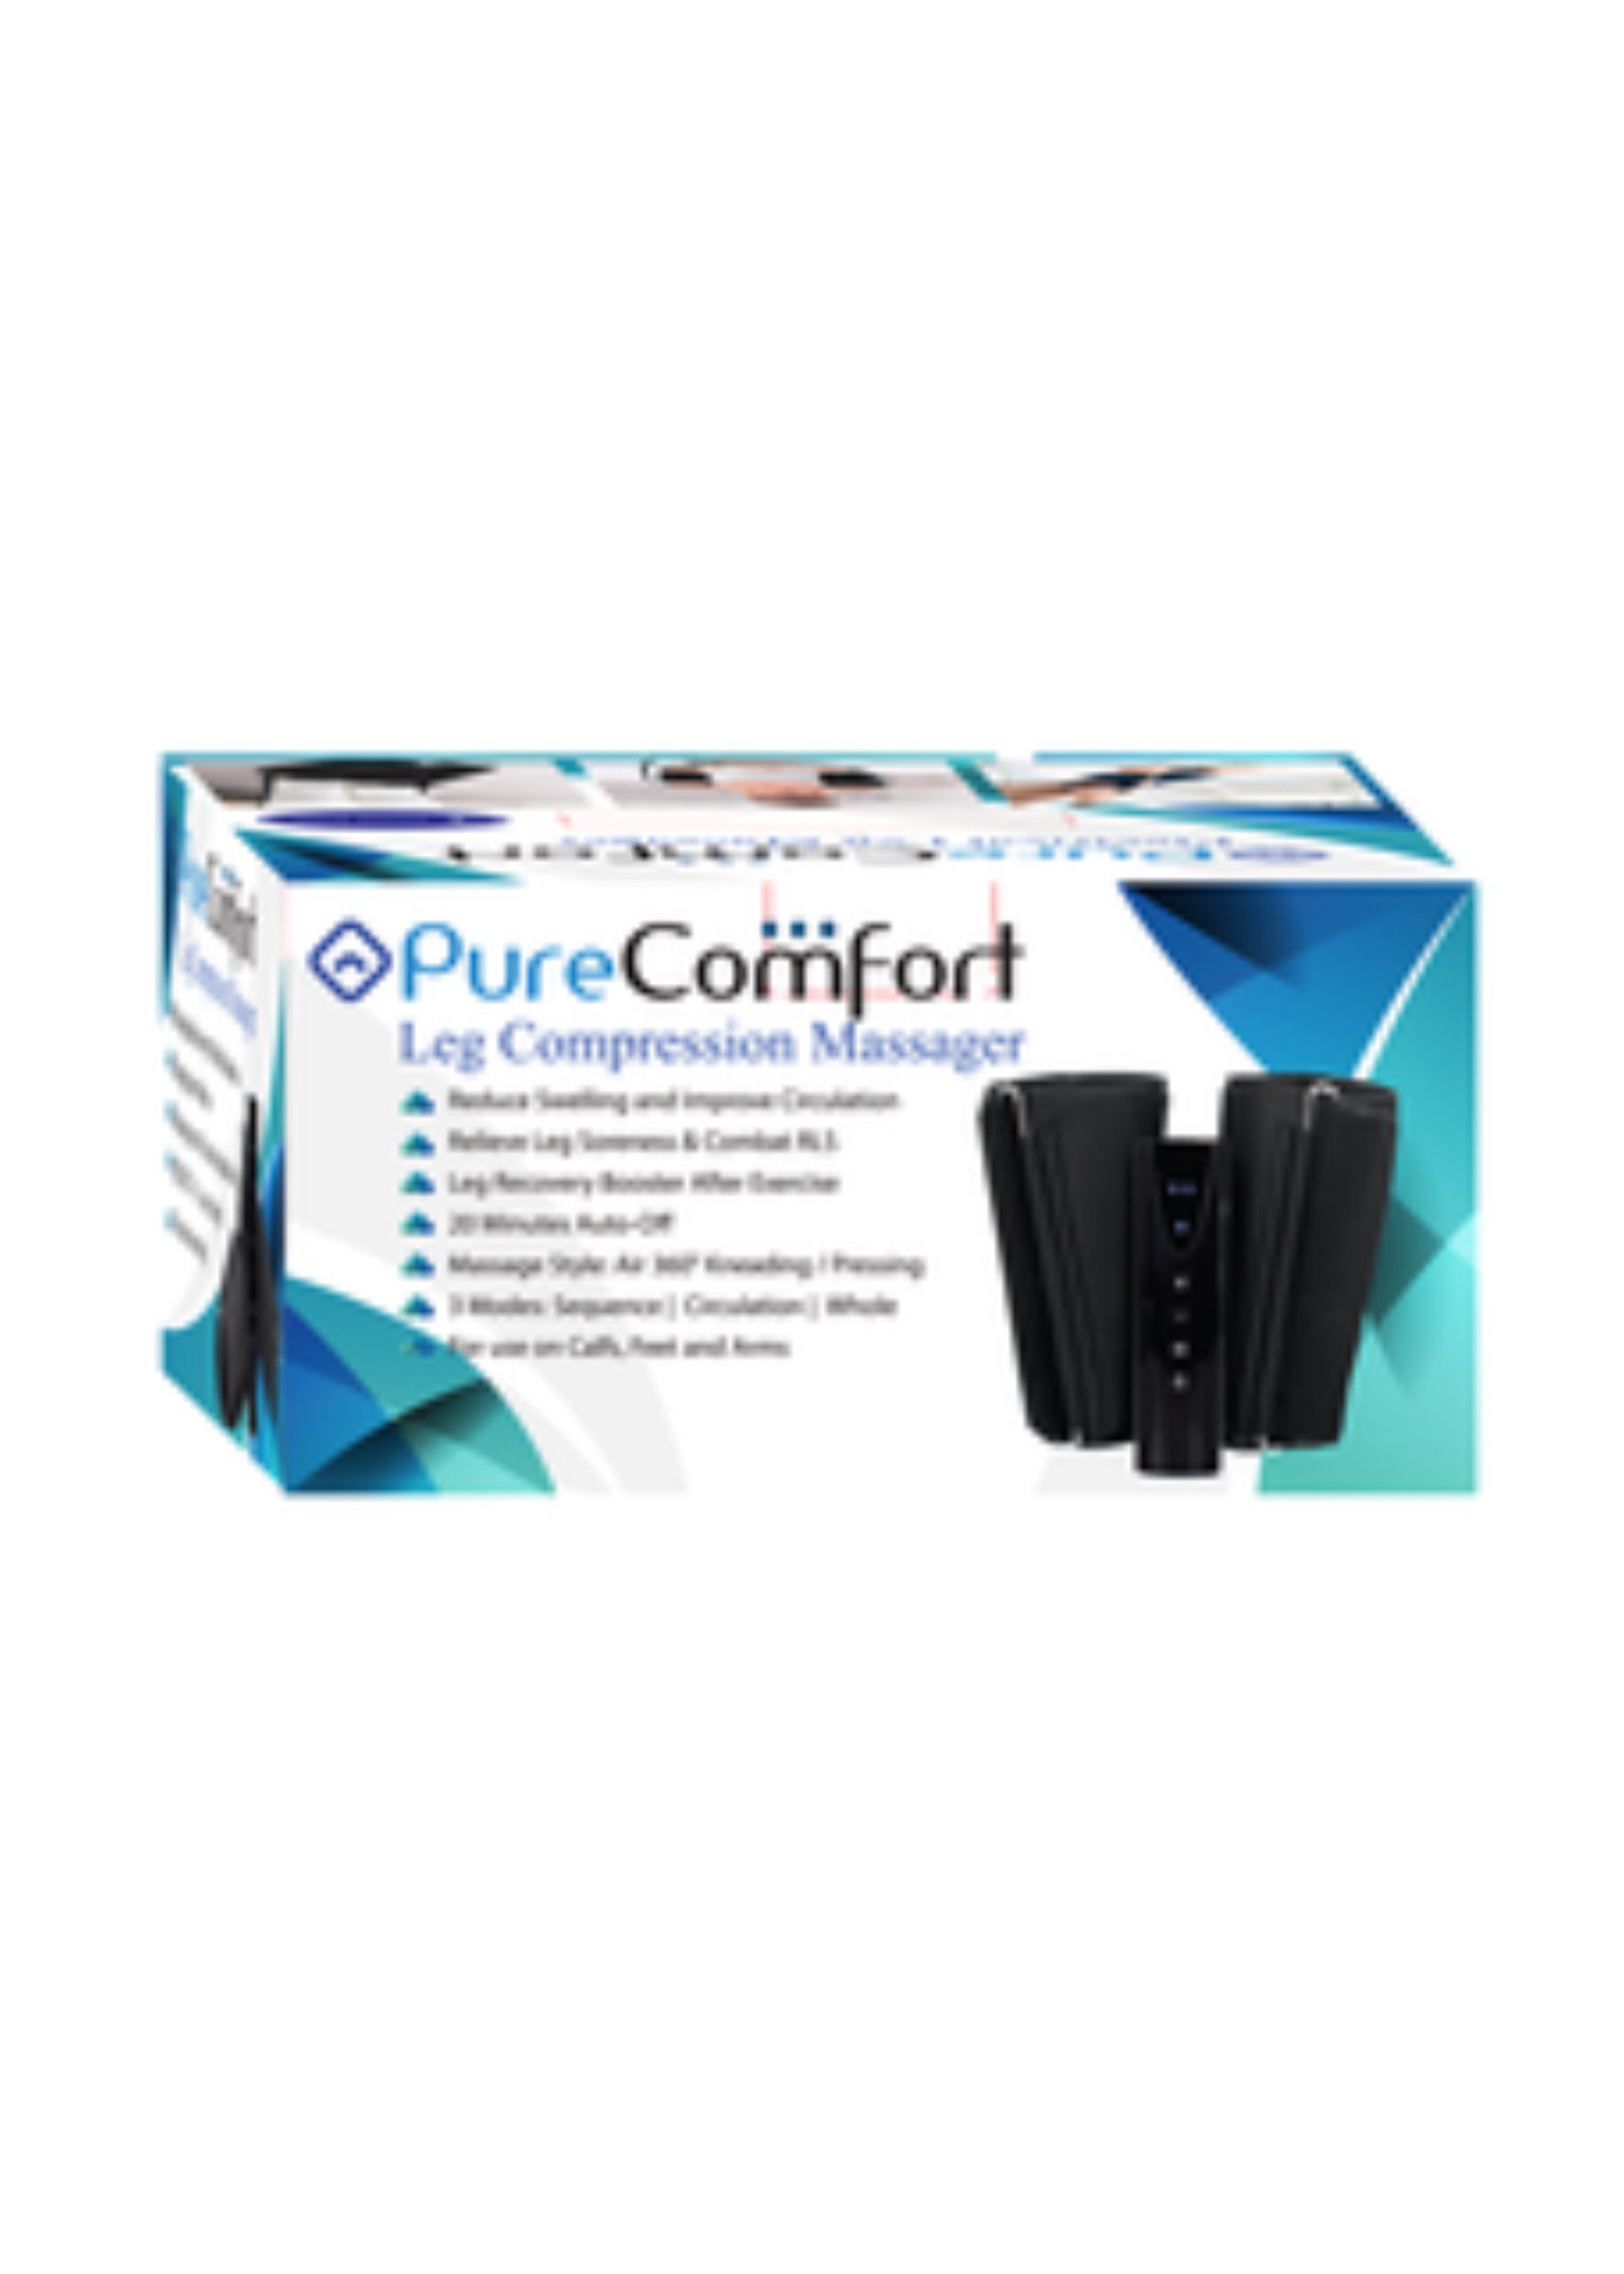 Pure Comfort Electric Compression Leg & Arm Massager, 8/case - NDC# 50027-0494-35